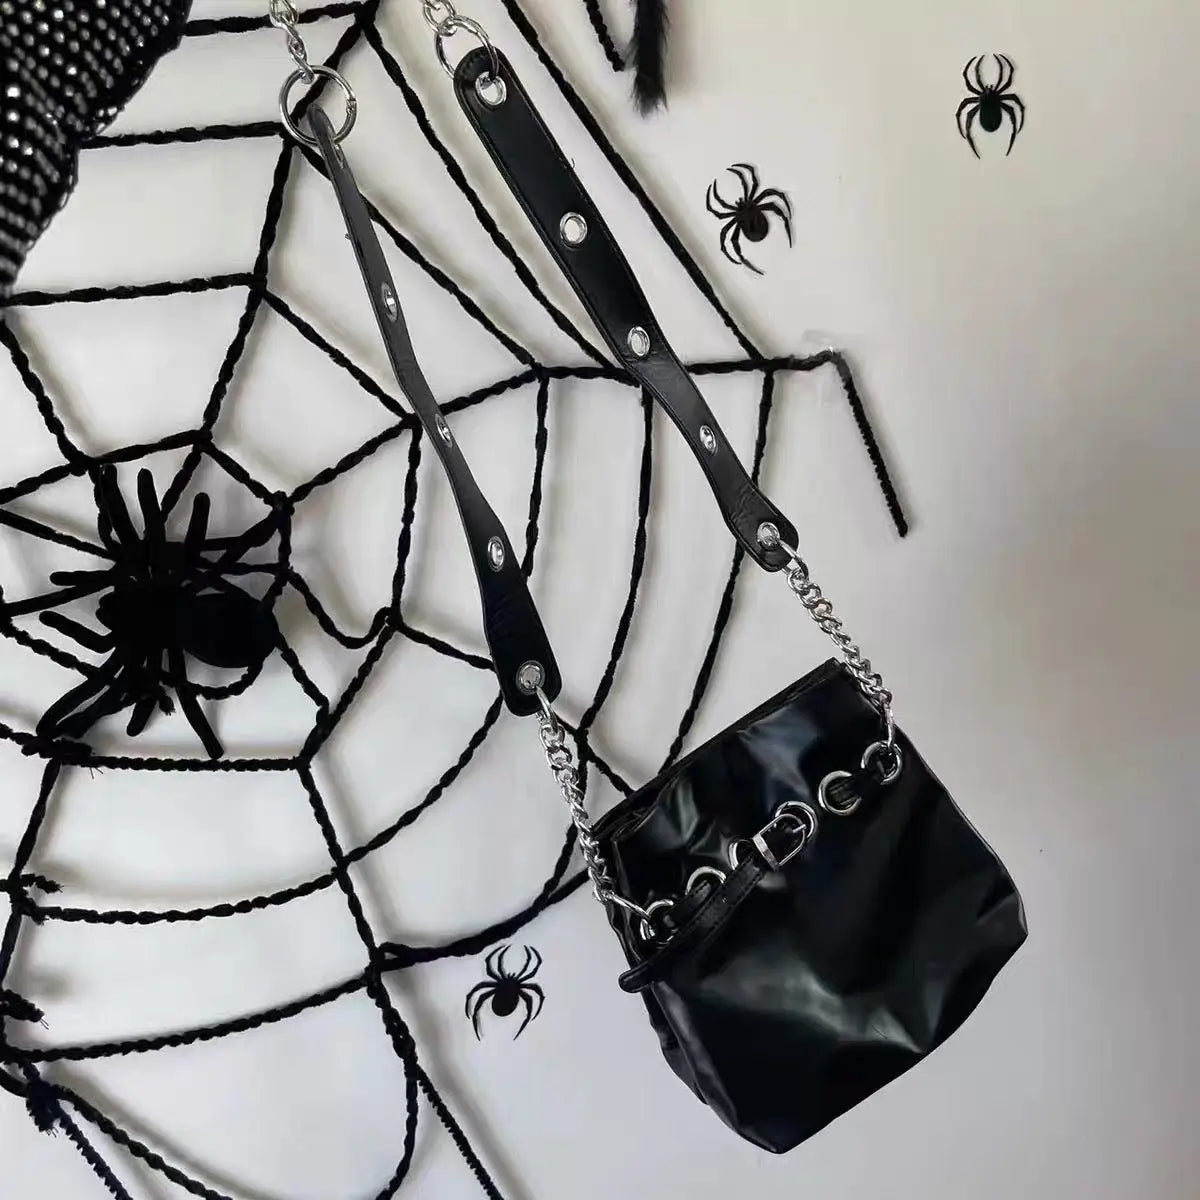 Nible' Alt Dark Spider Bear Detachable Bag AlielNosirrah